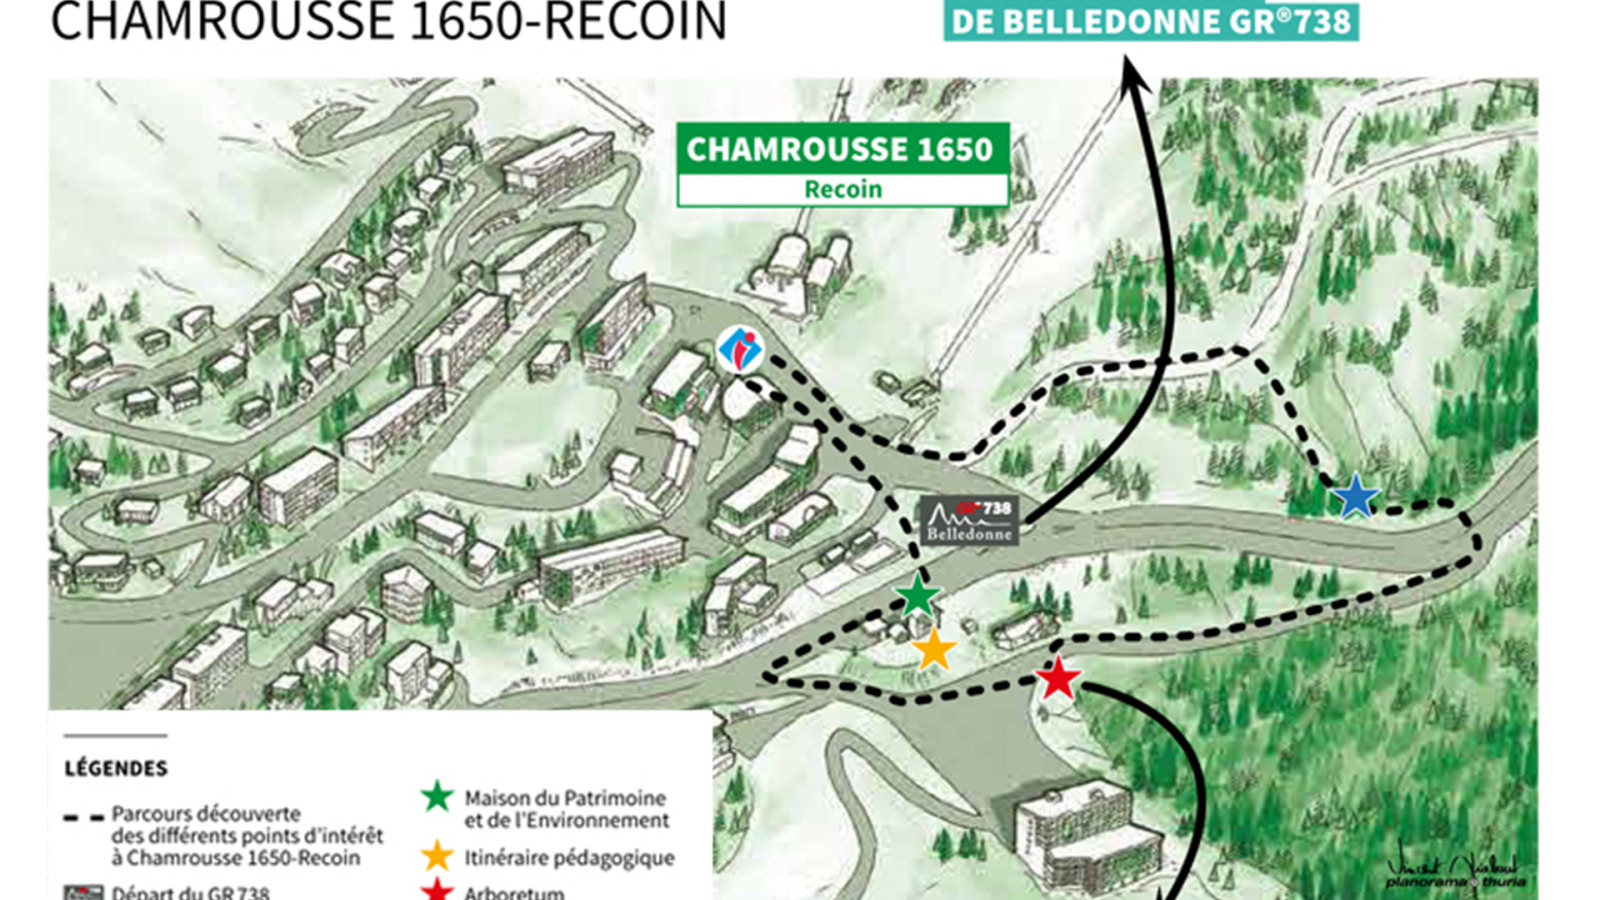 Chamrousse educational exhibition path map